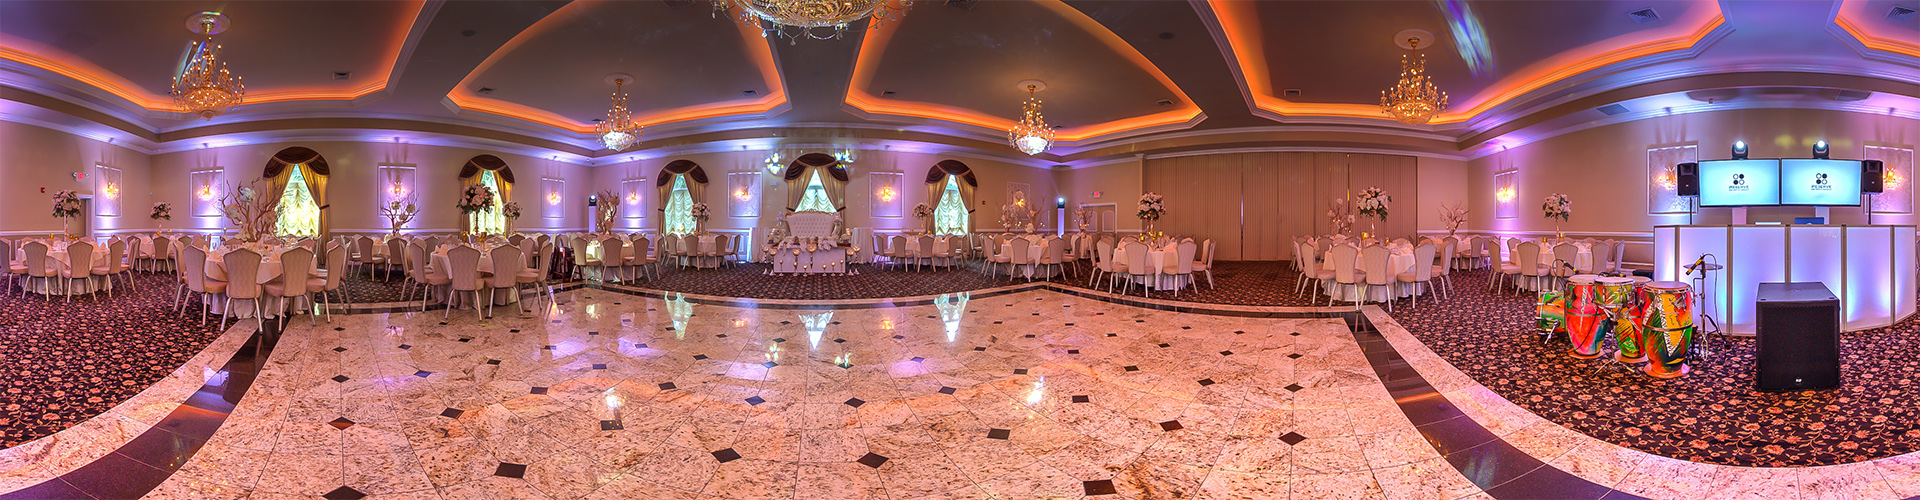 Casa Bianca Banquet Hall ballroom by 360SiteVisit